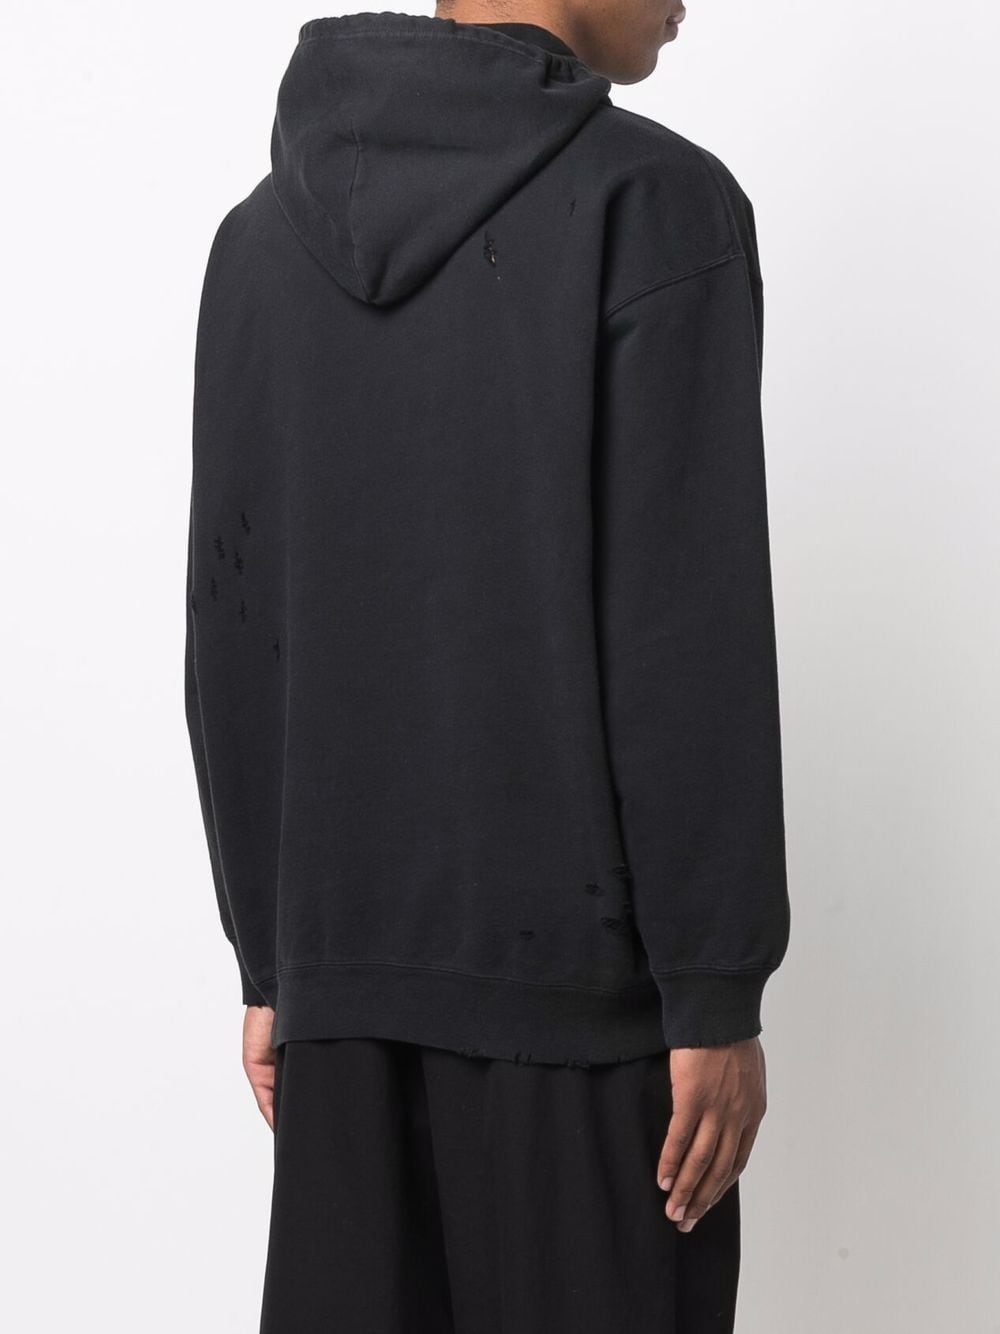 Balenciaga logo-print hoodie